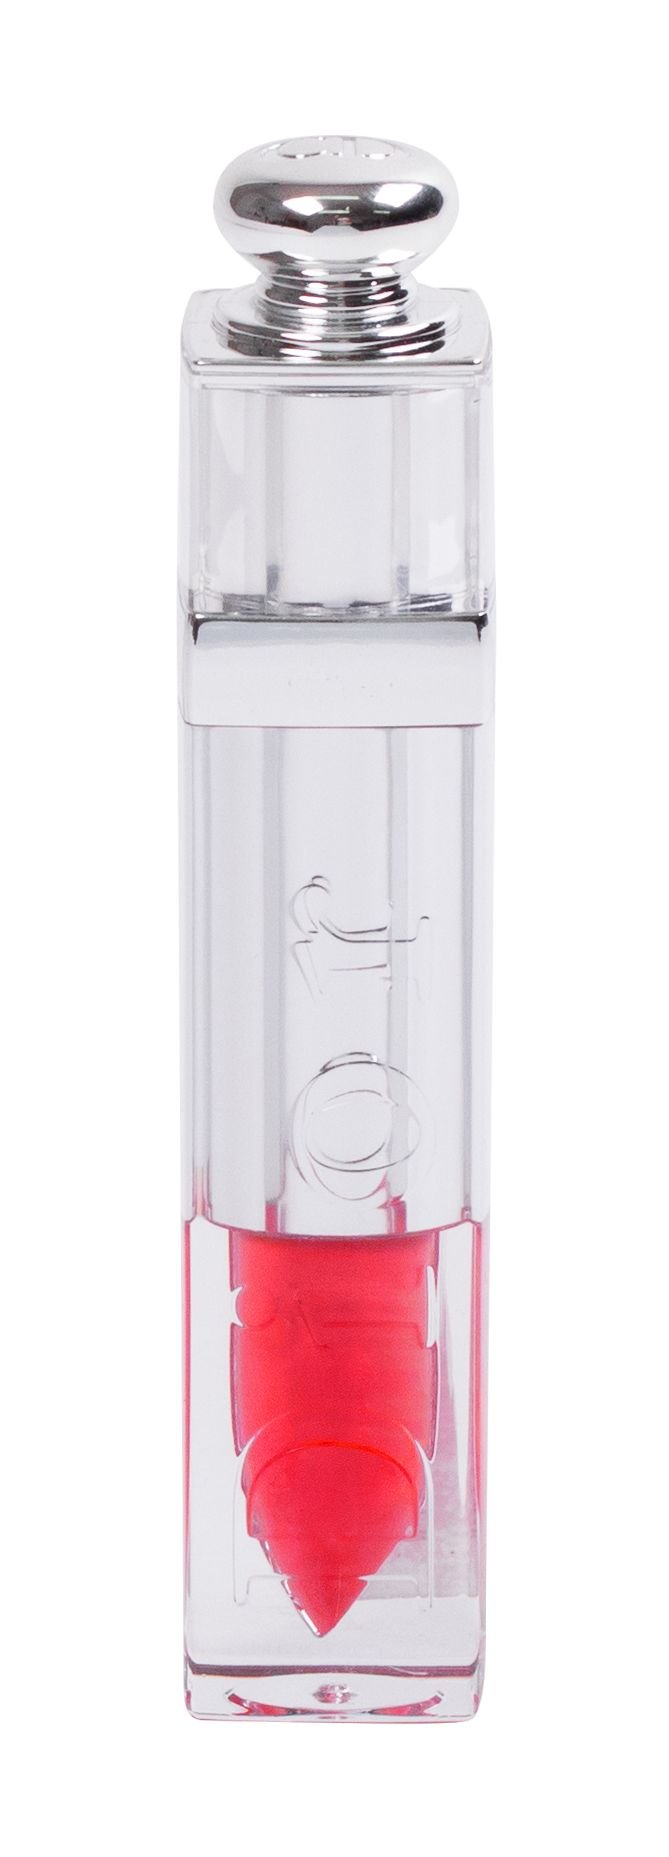 Christian Dior Addict Fluid Stick 5,5ml lūpų blizgesys Testeris